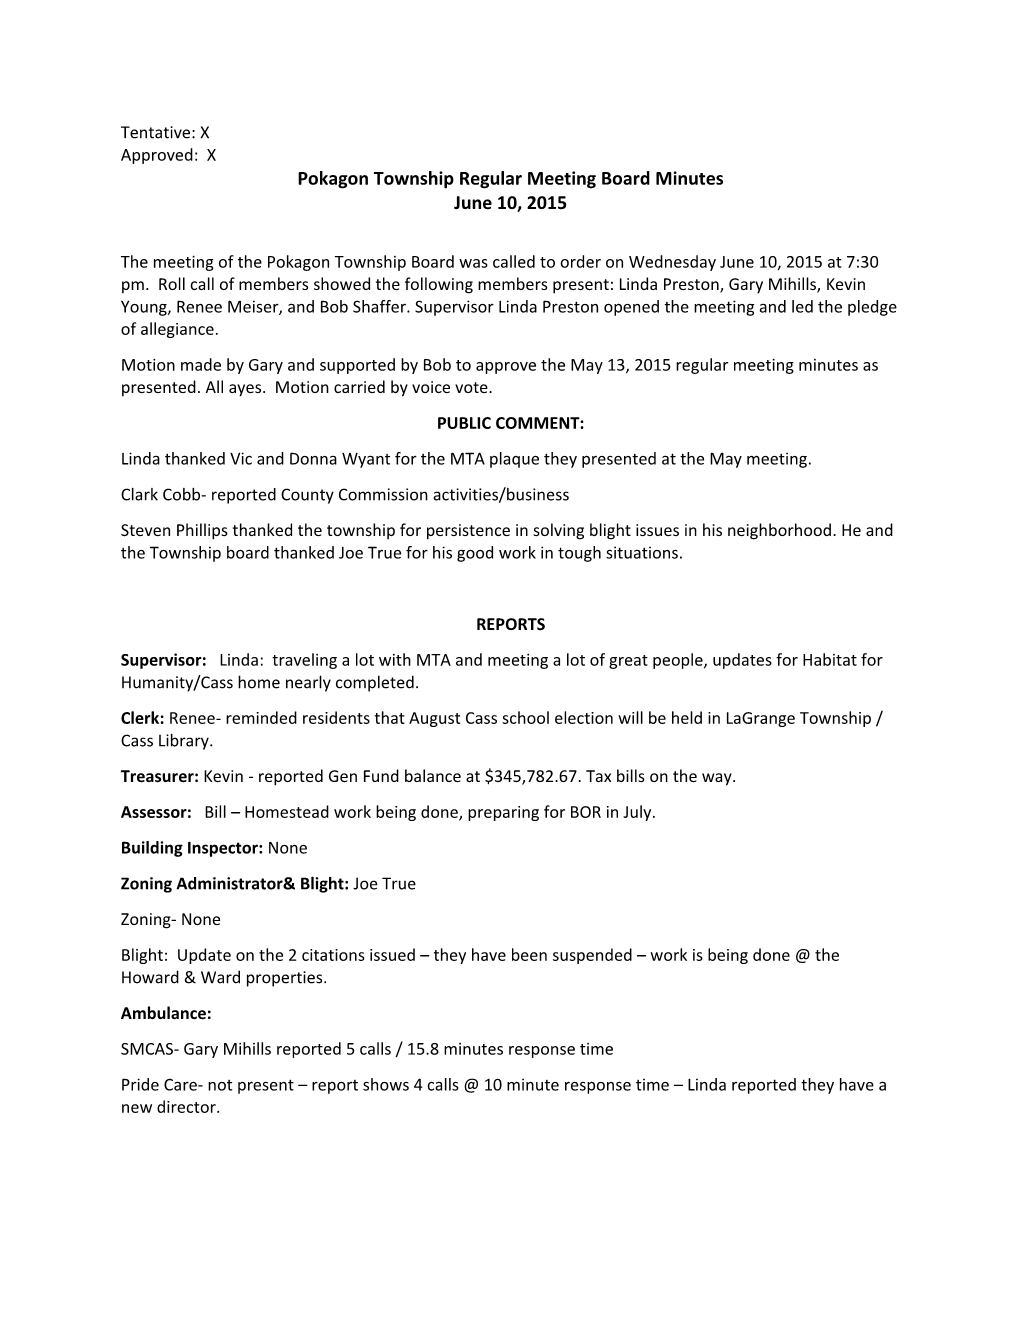 Pokagon Township Regular Meeting Board Minutes